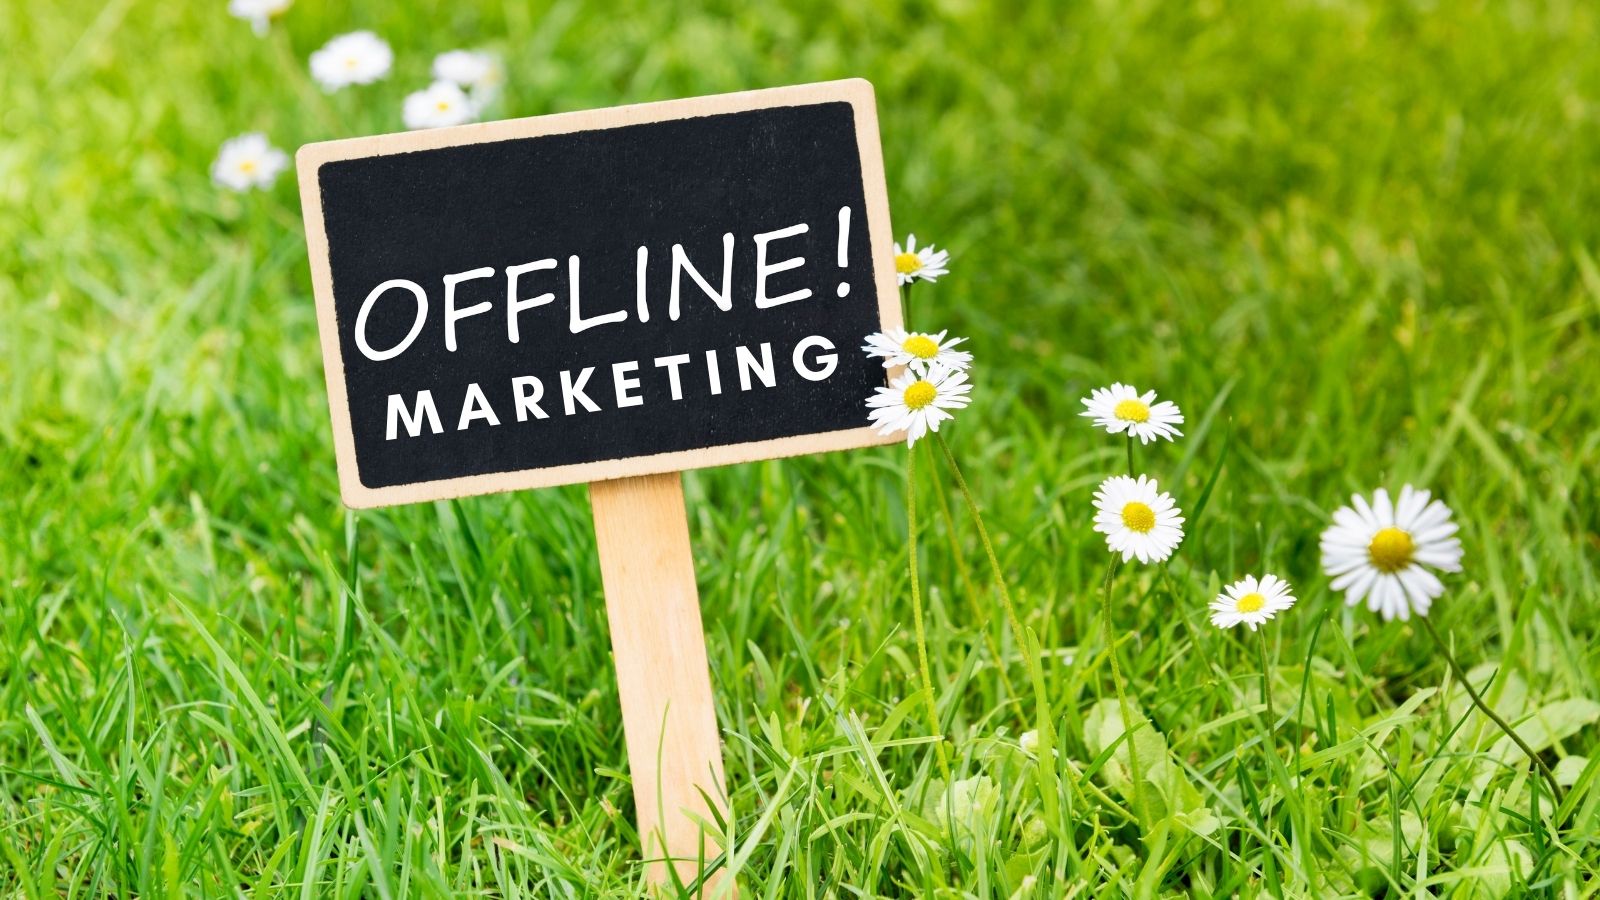 offline marketing